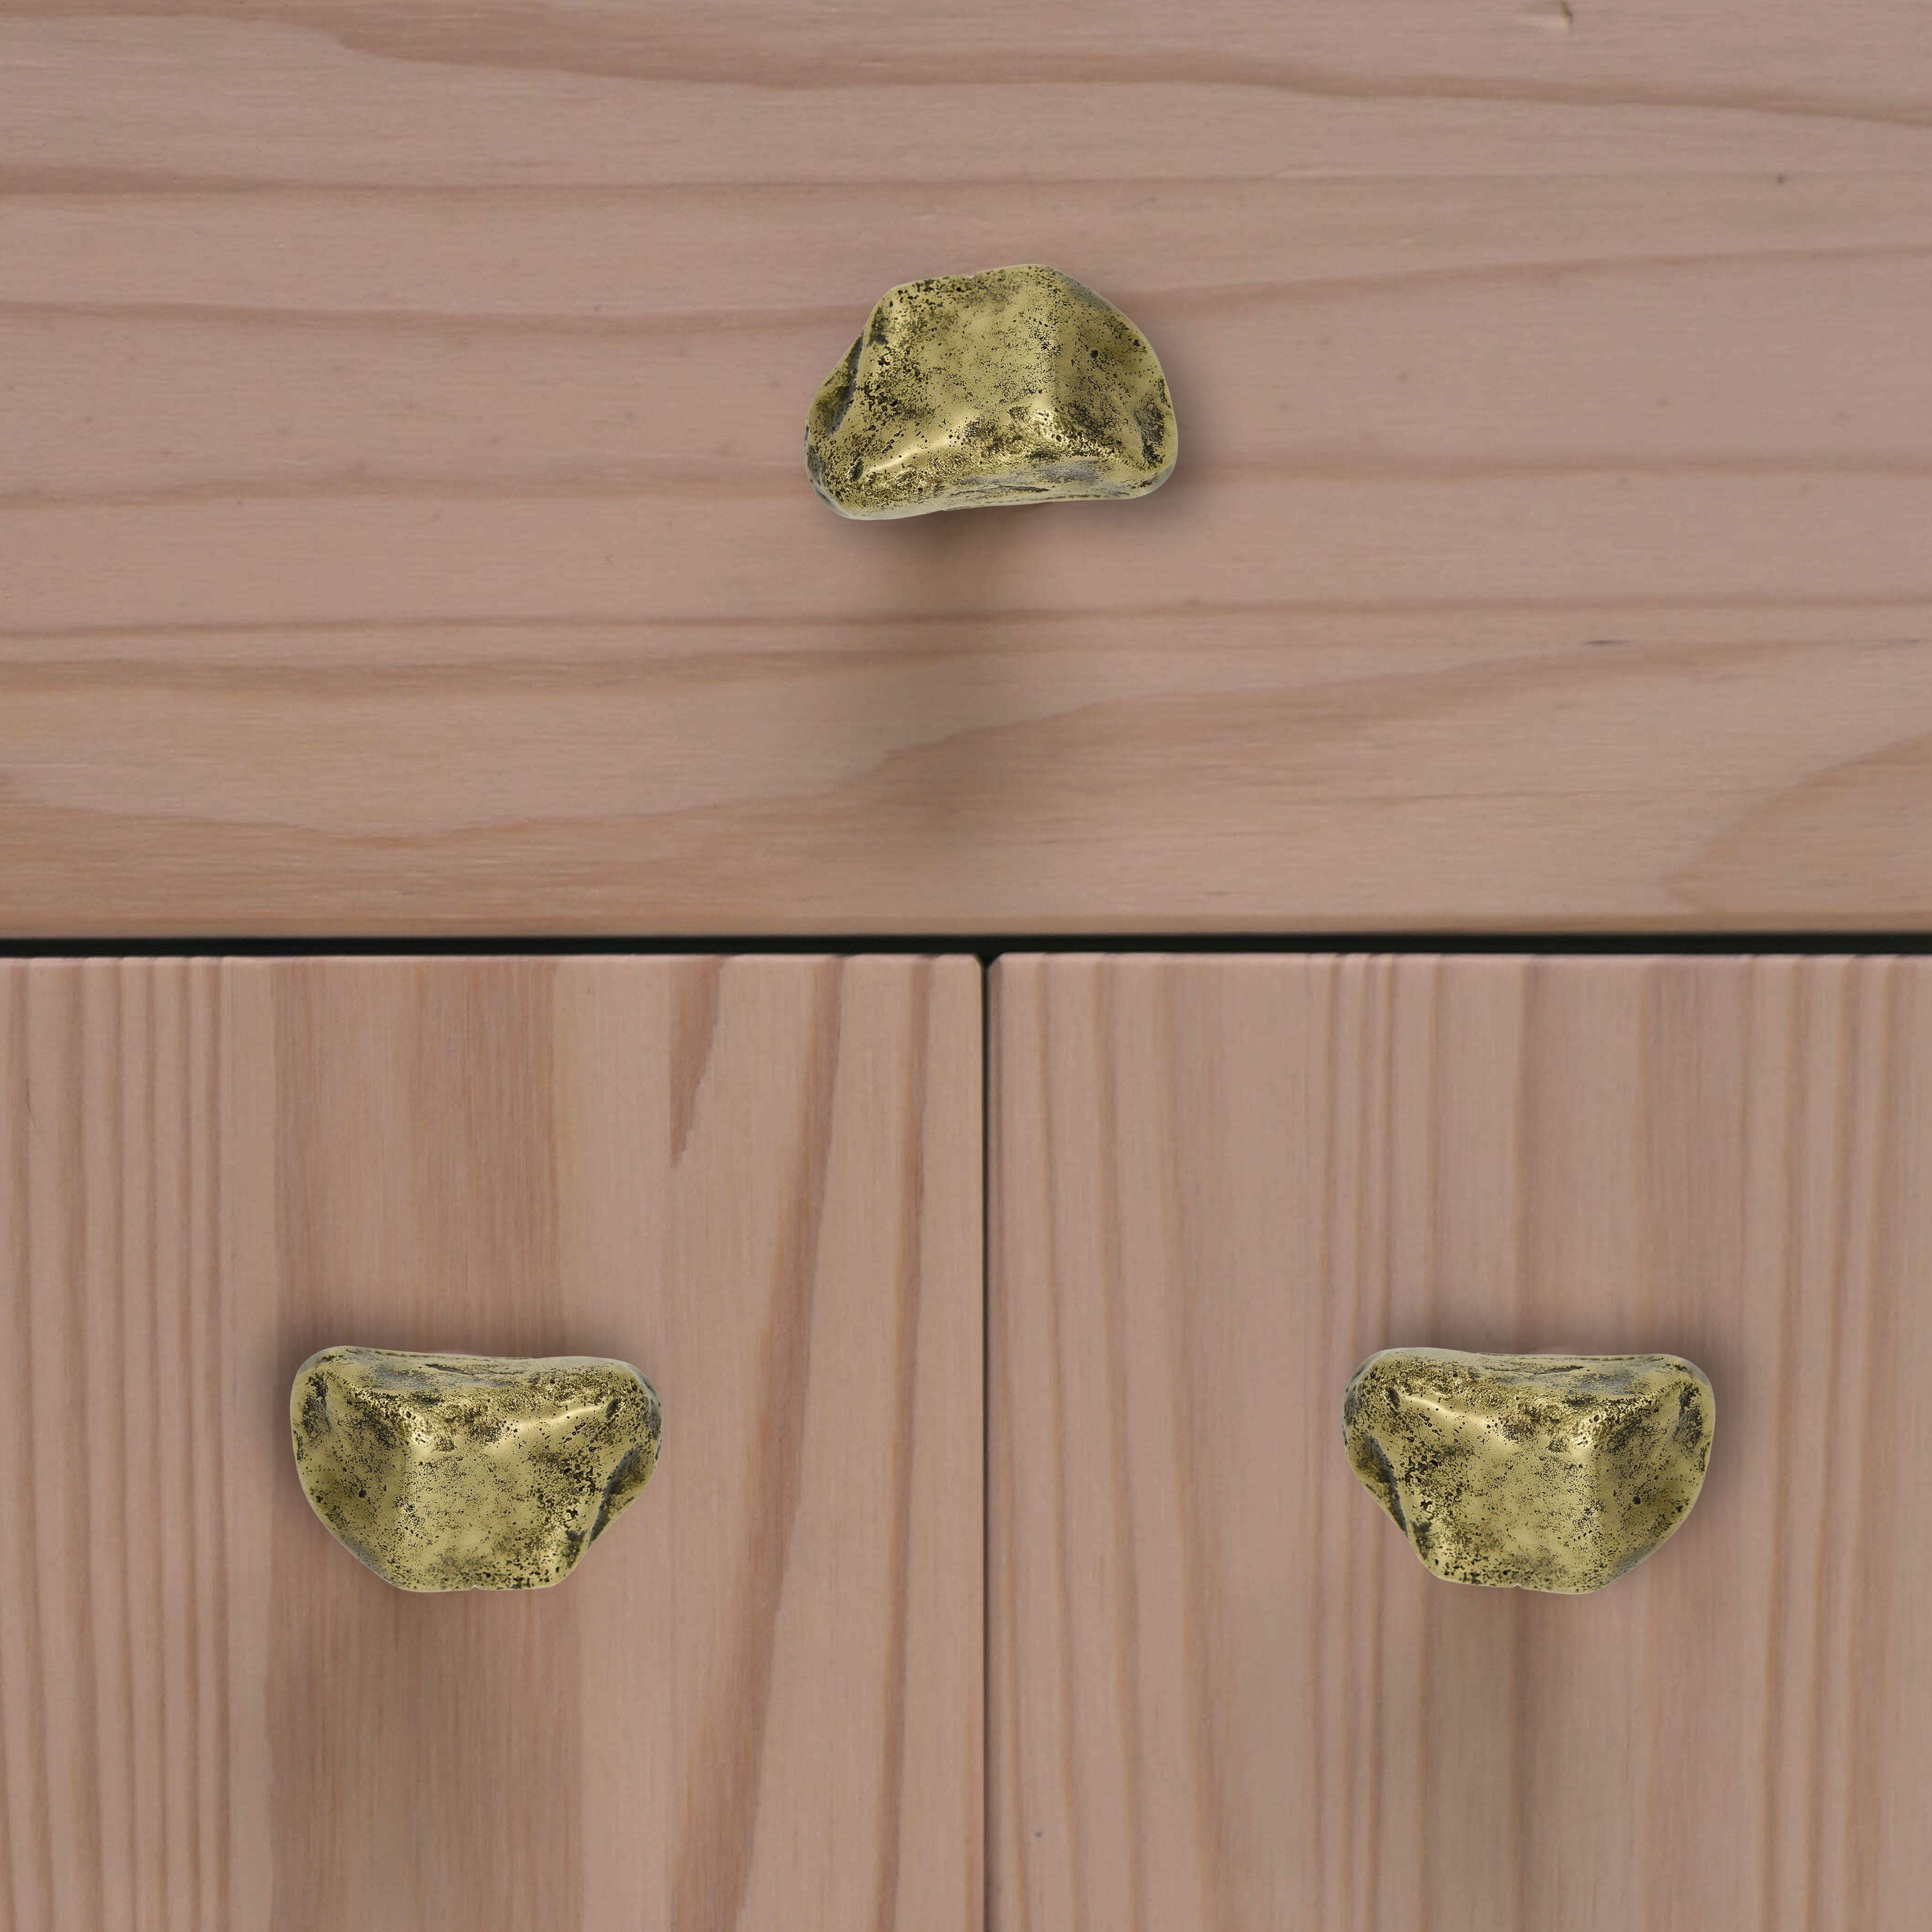 Brutalist Solid Brass Door Knobs Mineral Inspiration 7 x 5 cm For Sale